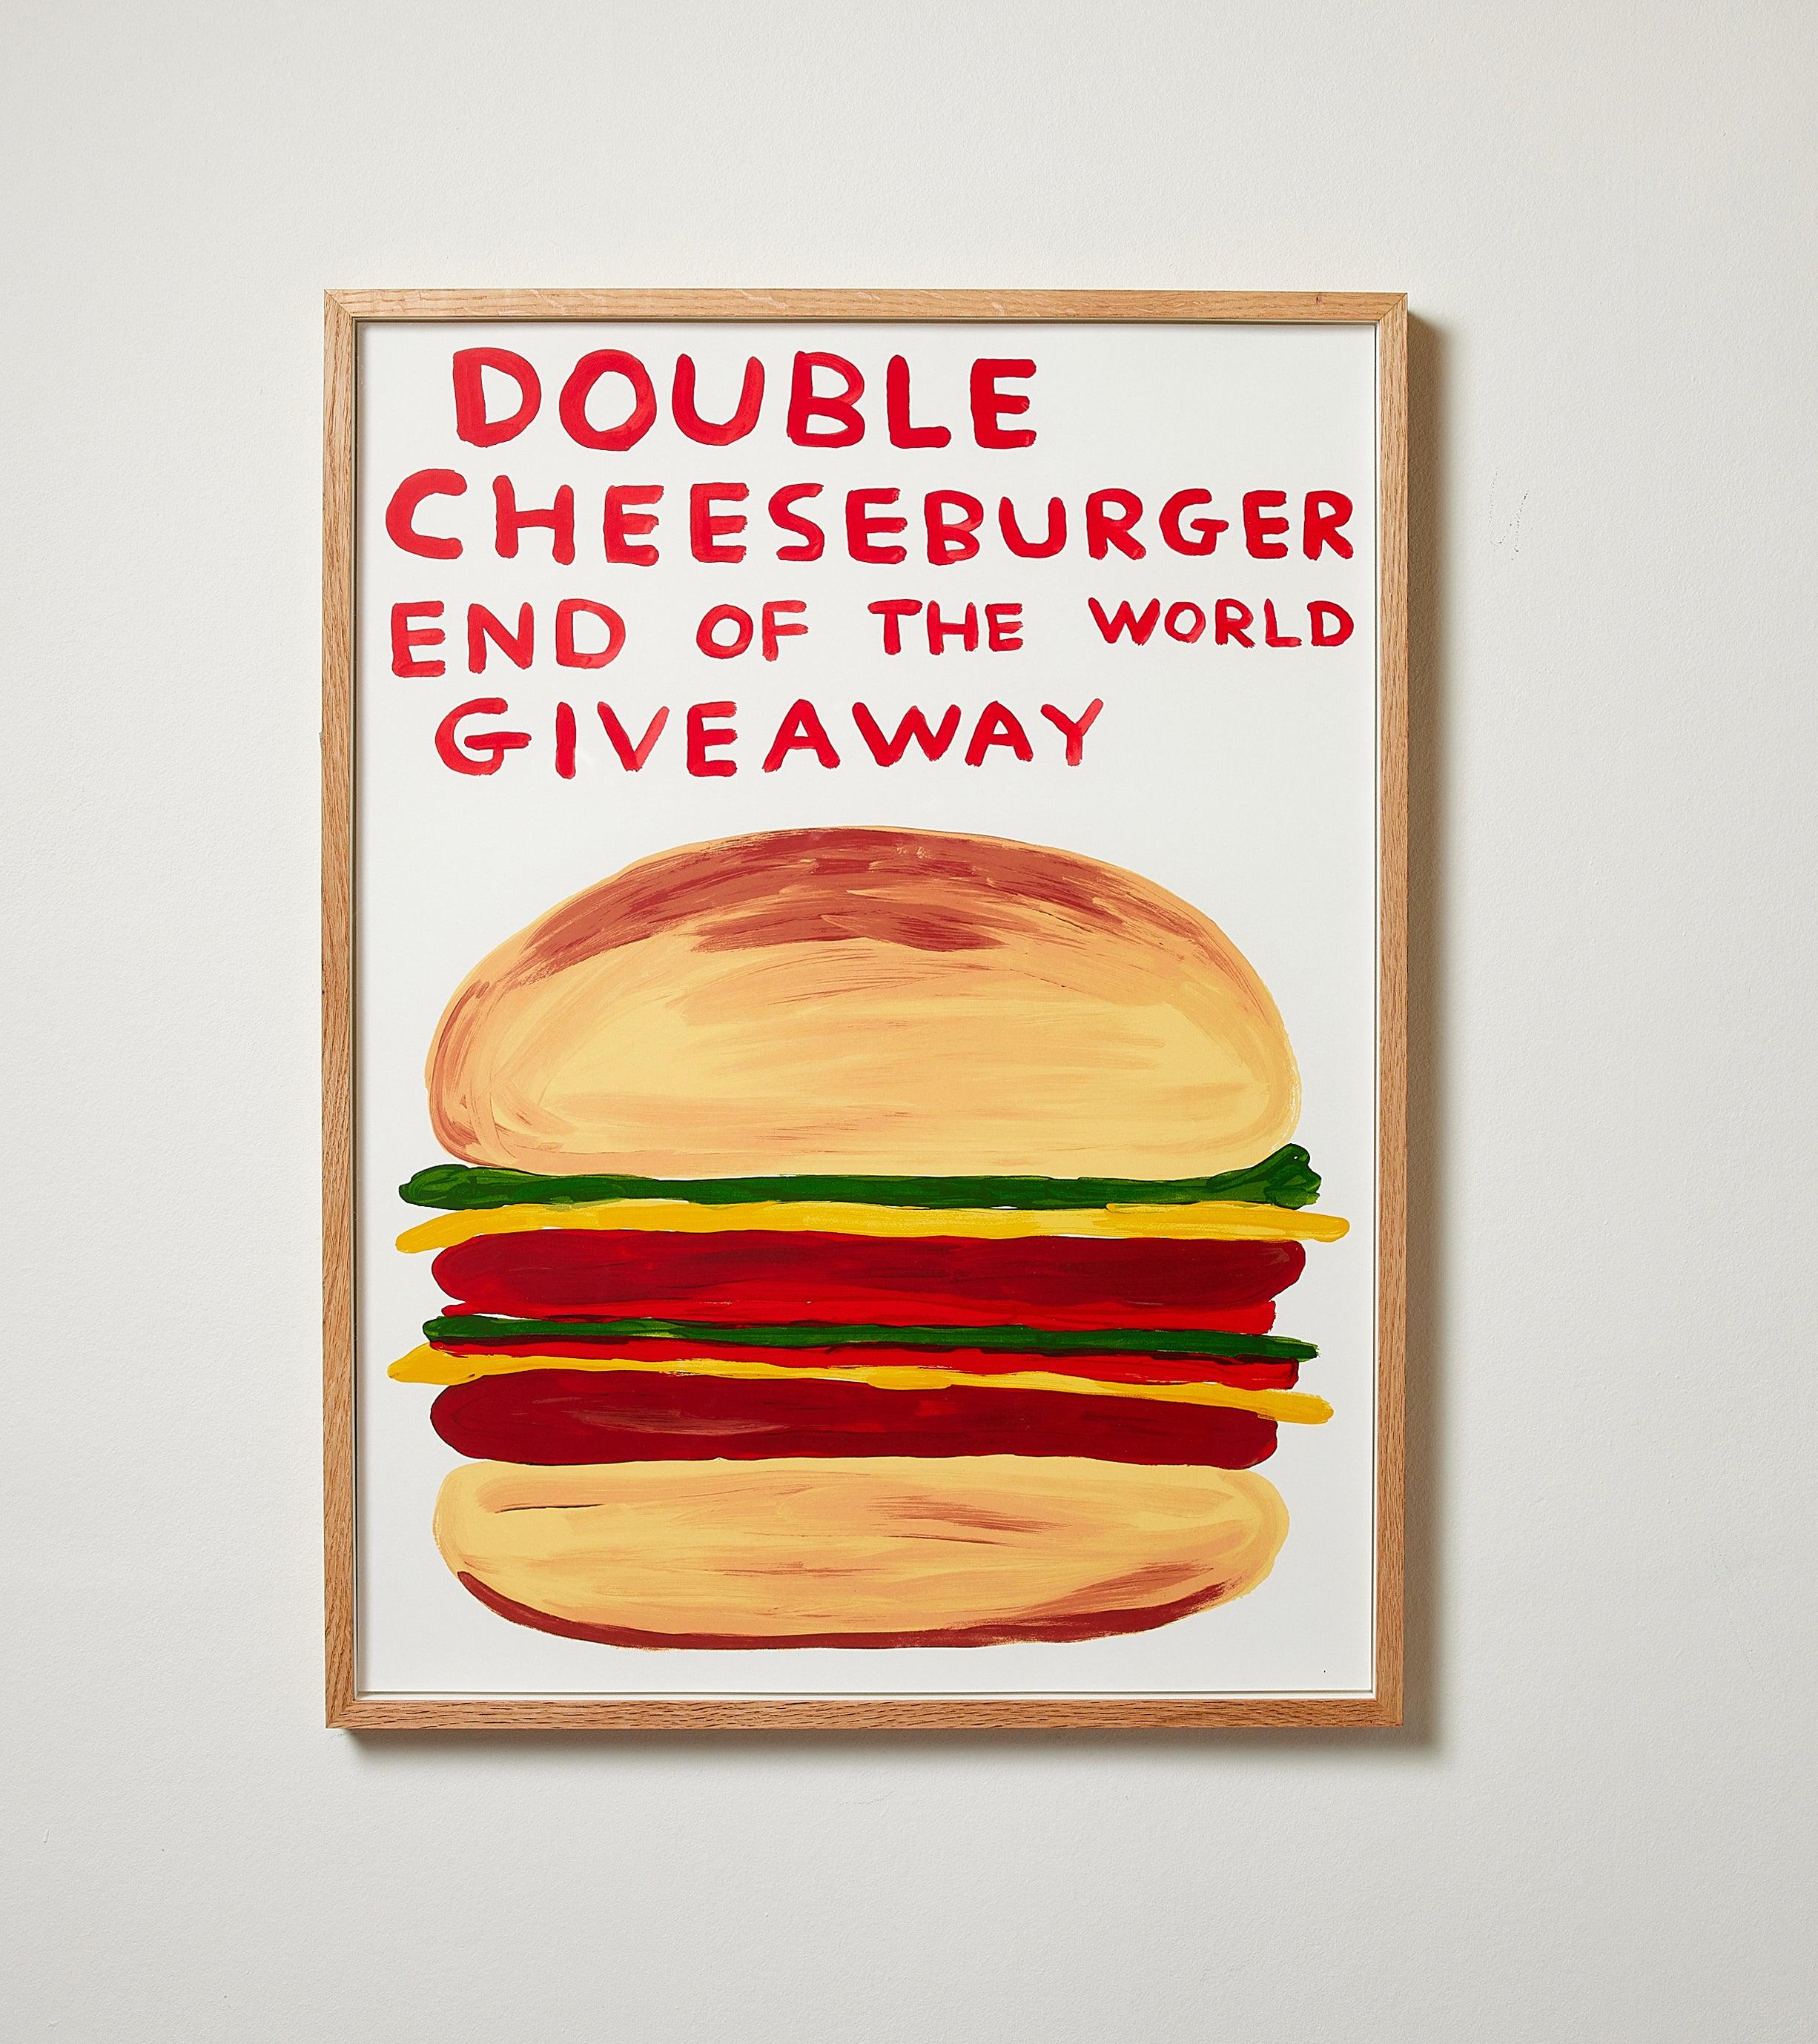 Double Cheeseburger End of the World Giveaway - Écran imprimé, alimentation, par Shrigley - Print de David Shrigley